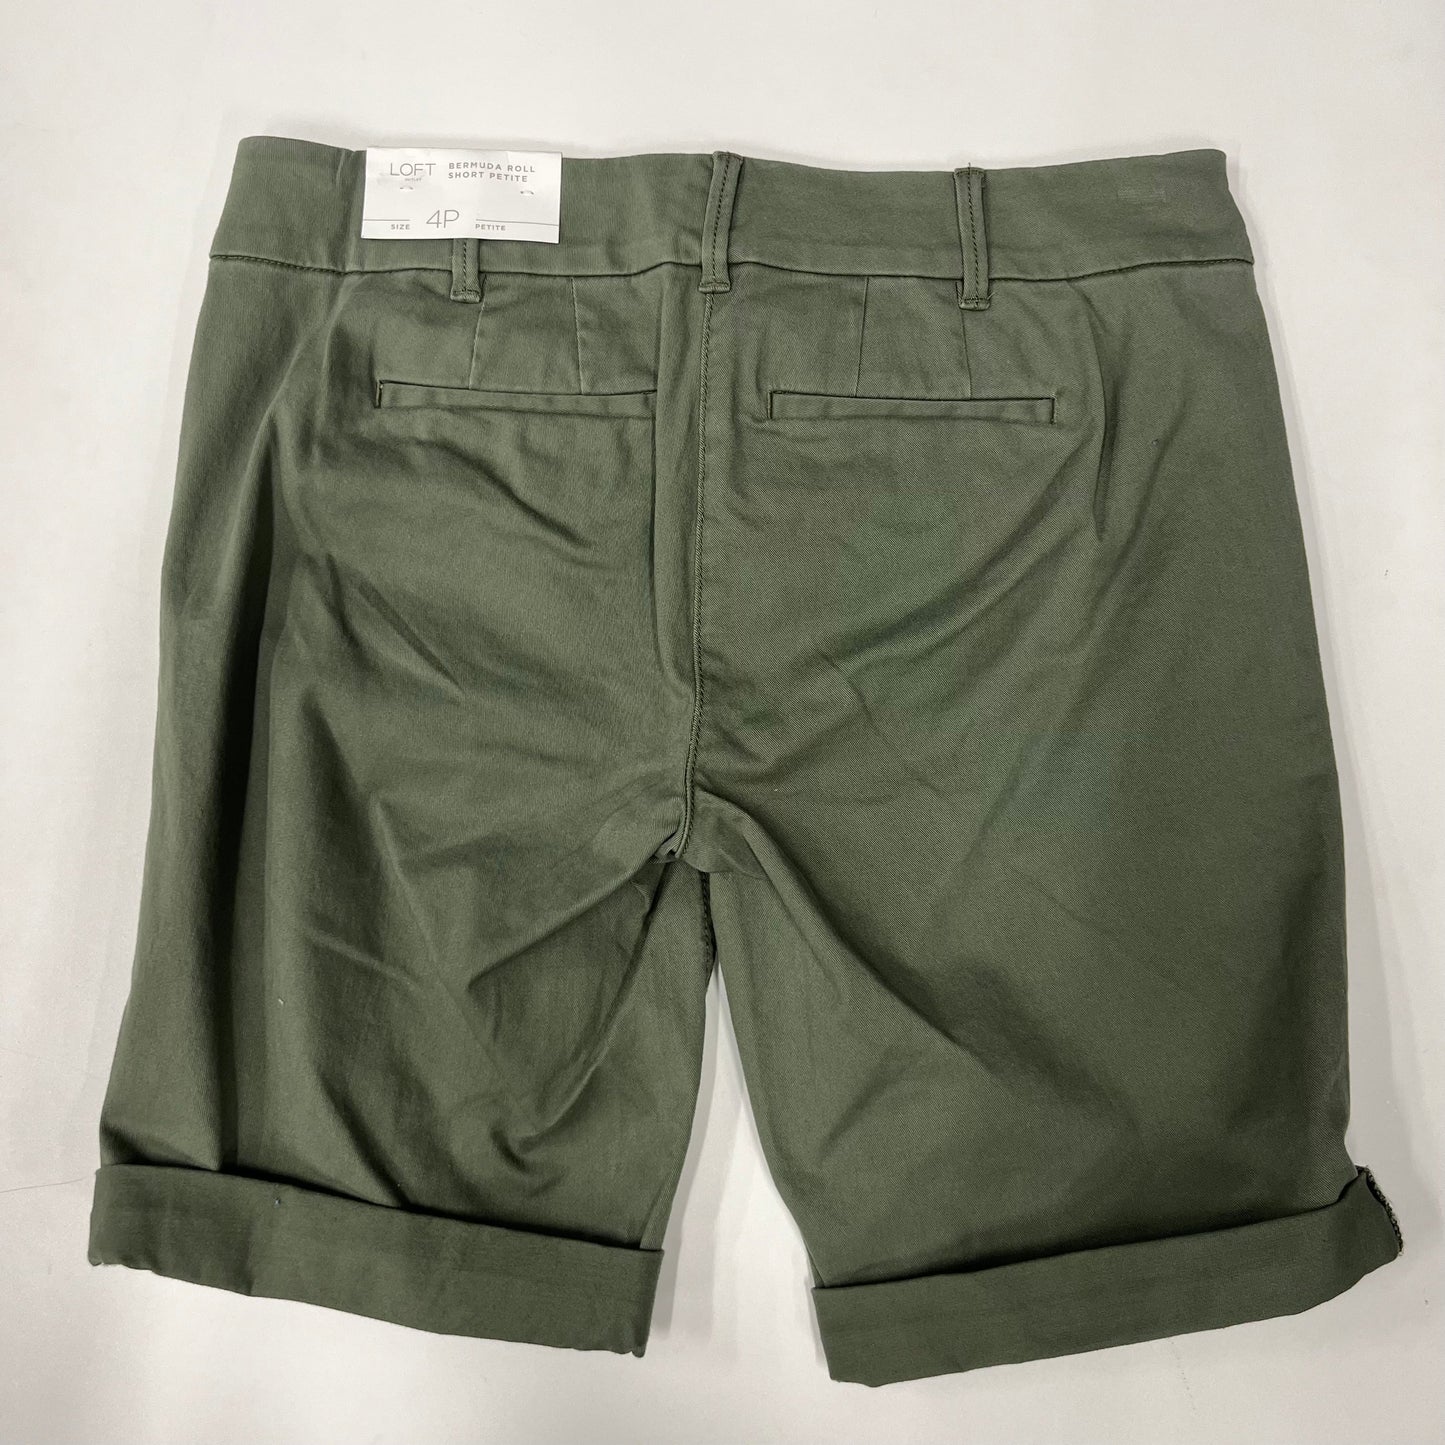 Shorts By Loft NWT Size: 4